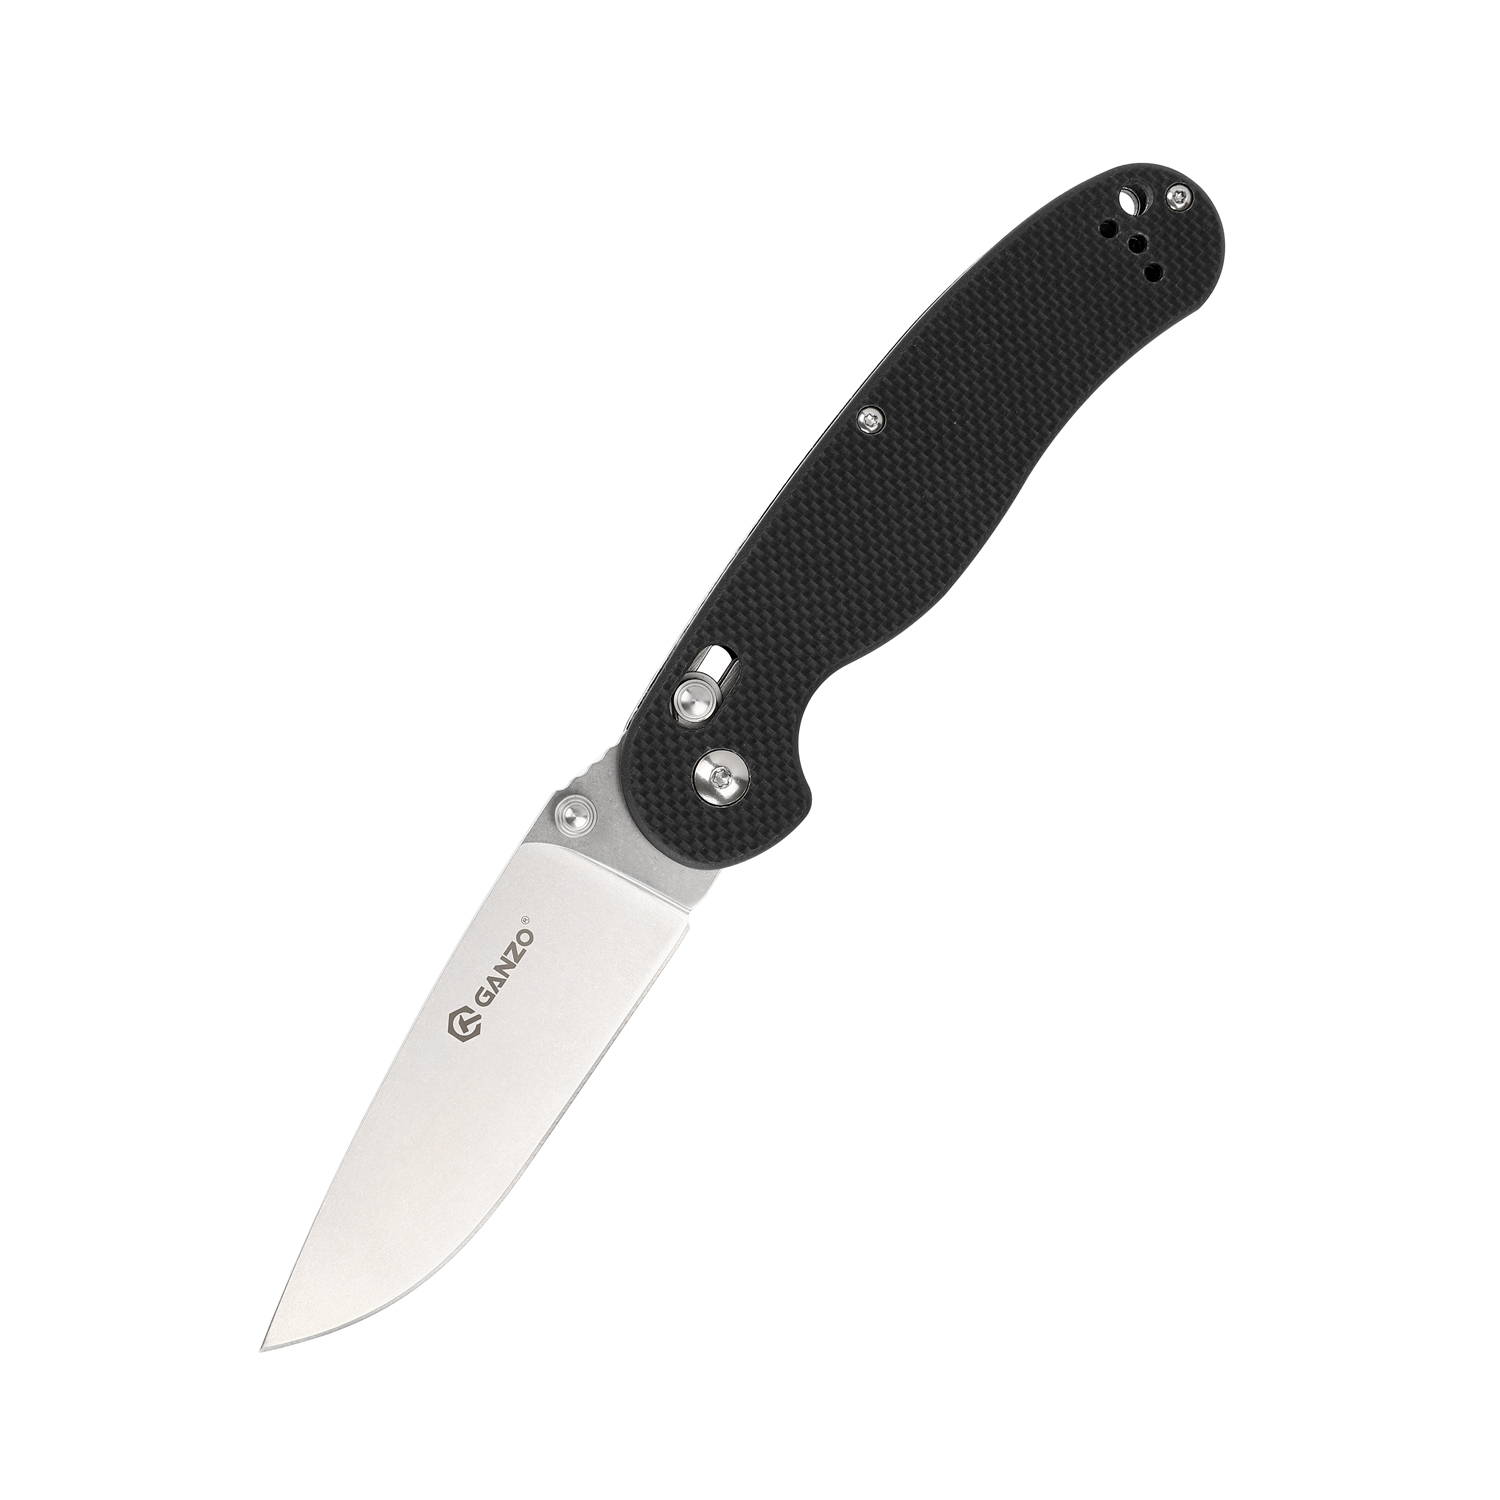 Складной нож Ganzo D727M-BK, сталь D2, рукоять G10, черный, Бренды, Ganzo